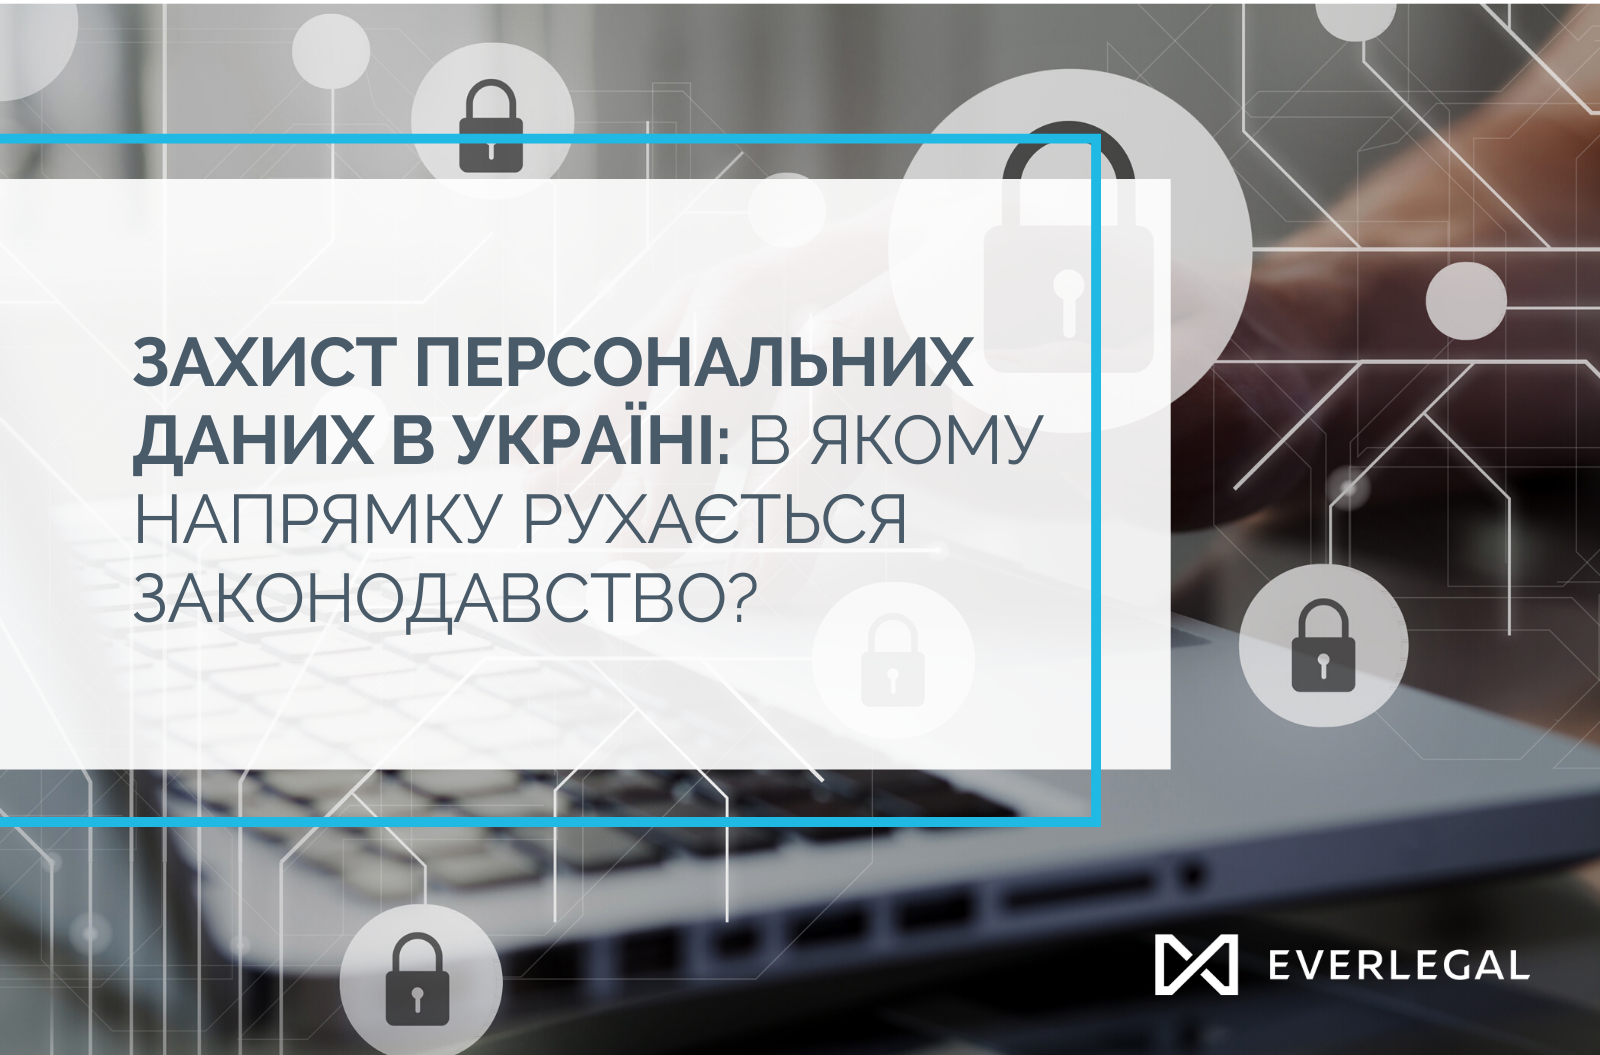 Personal data protection in Ukraine: legislative perspective